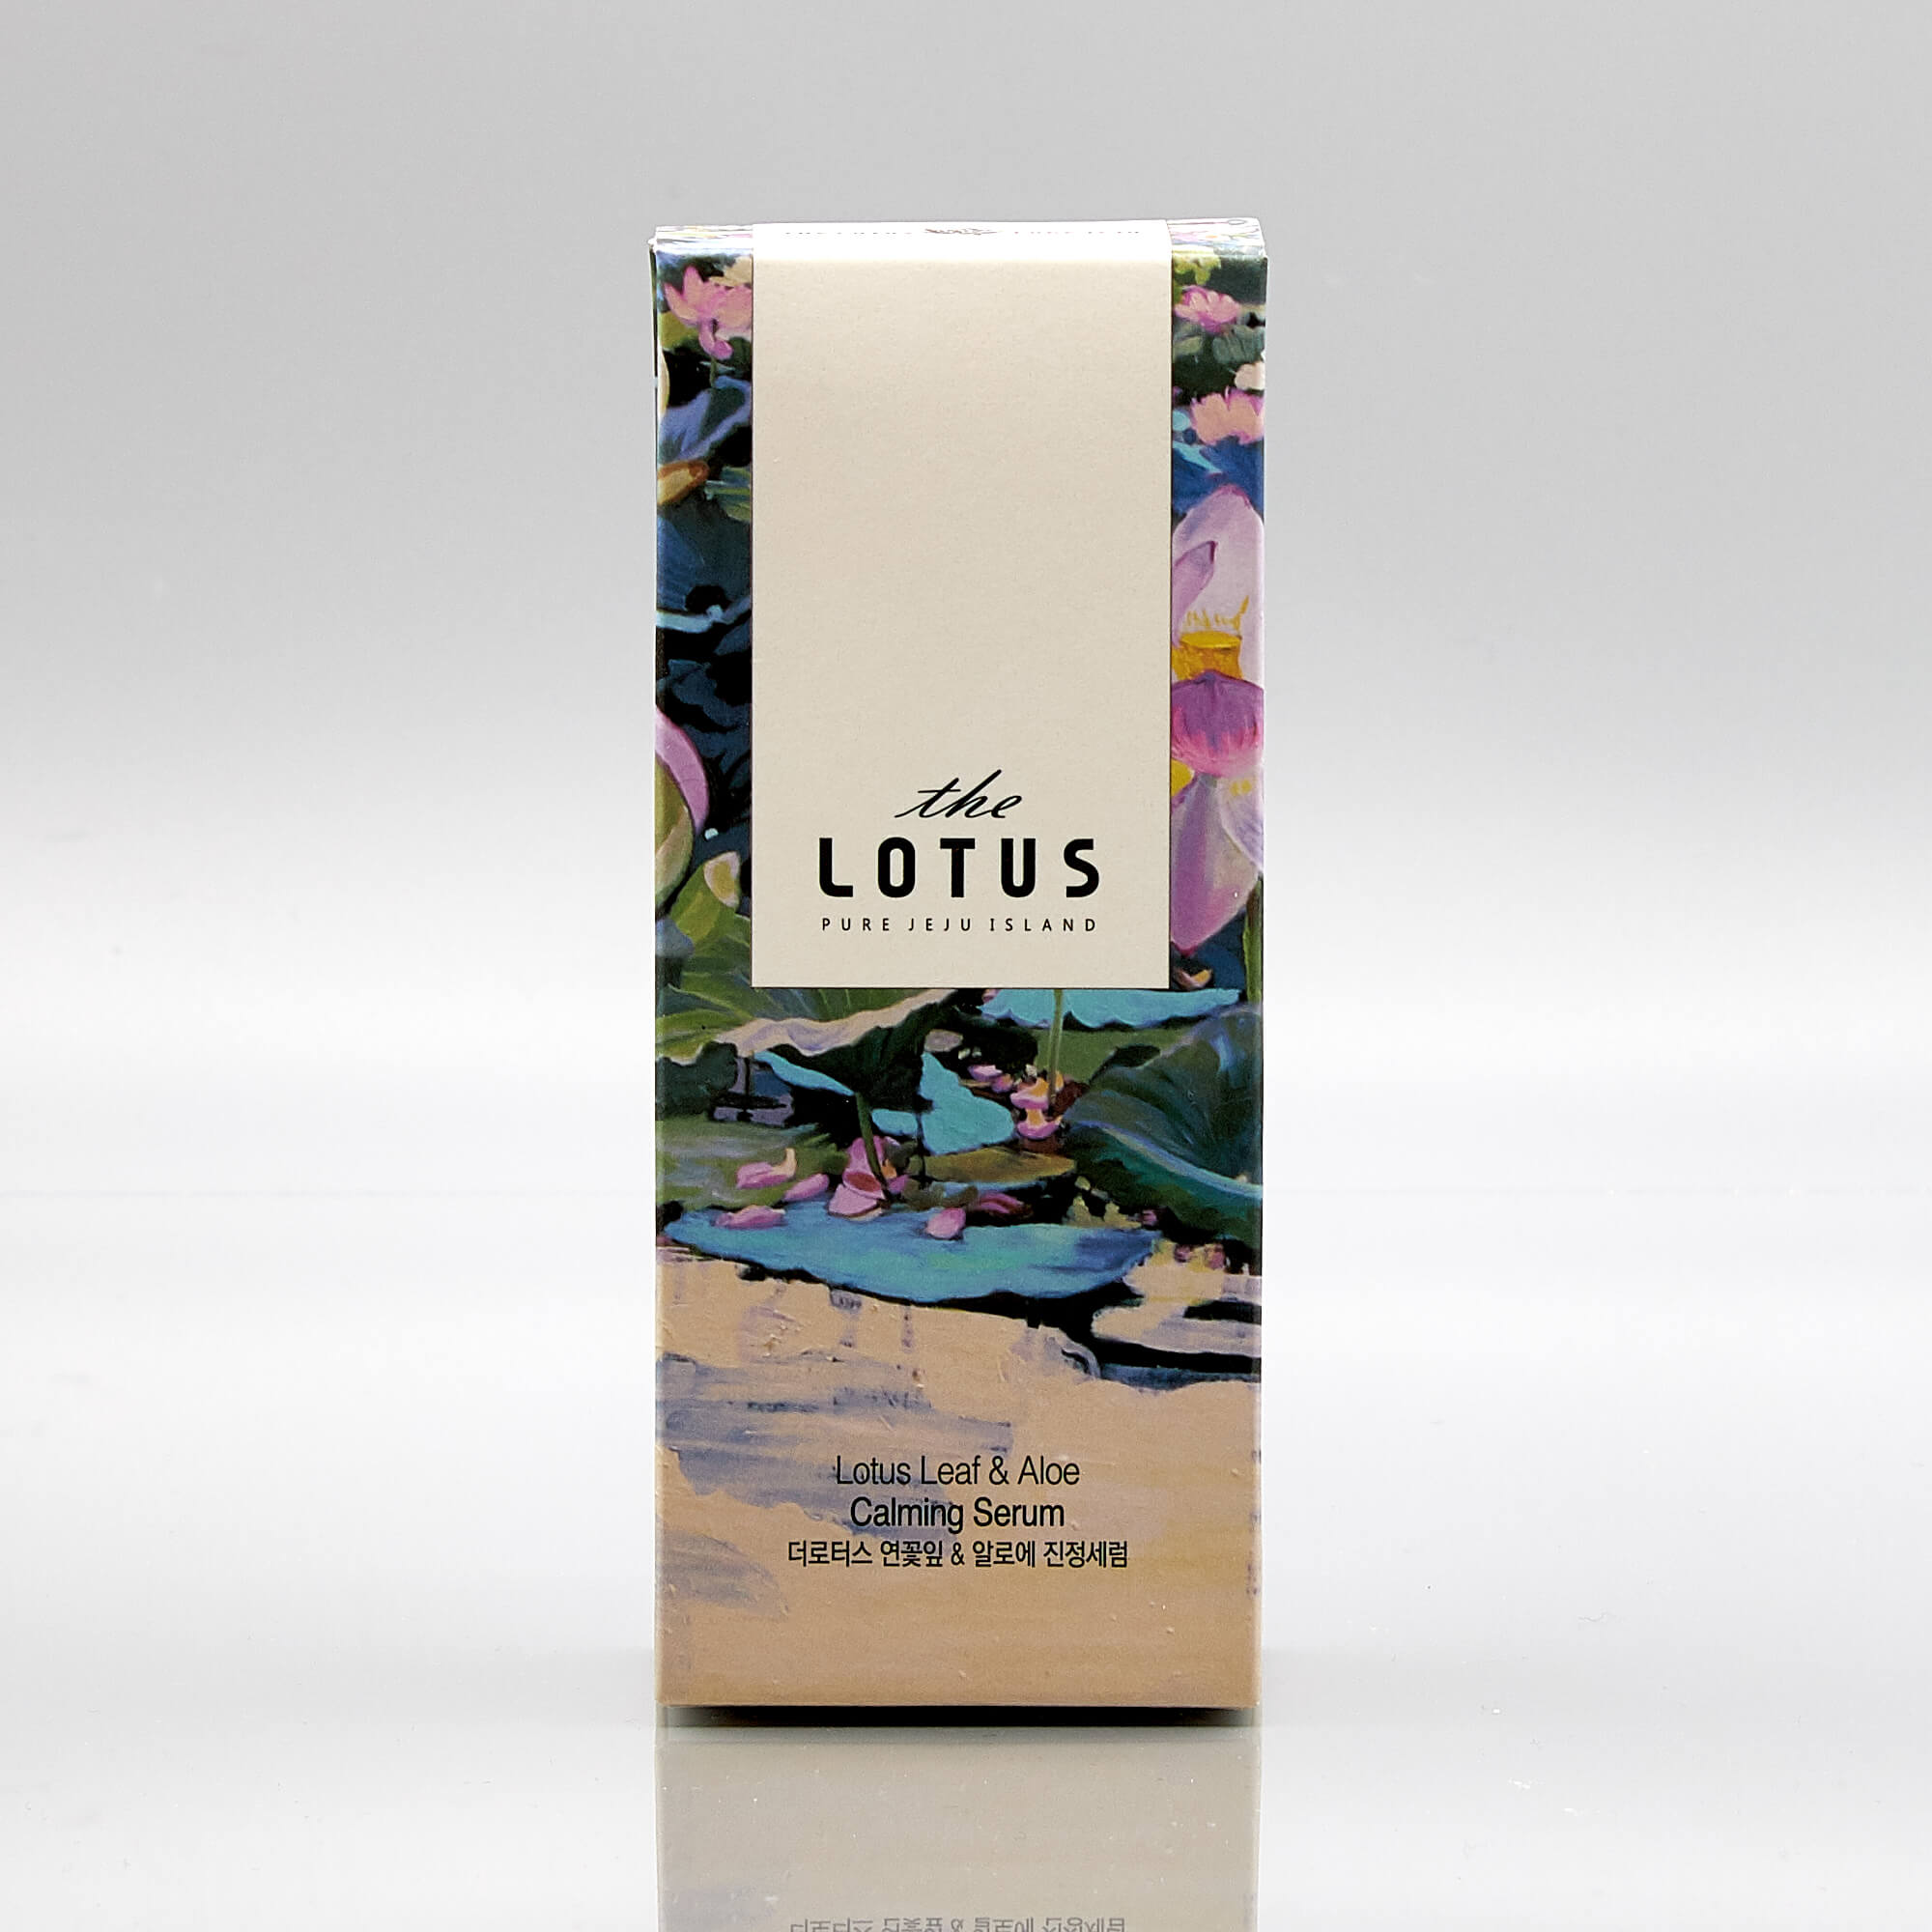 The Lotus - Lotus Leaf & Aloe Calming Serum